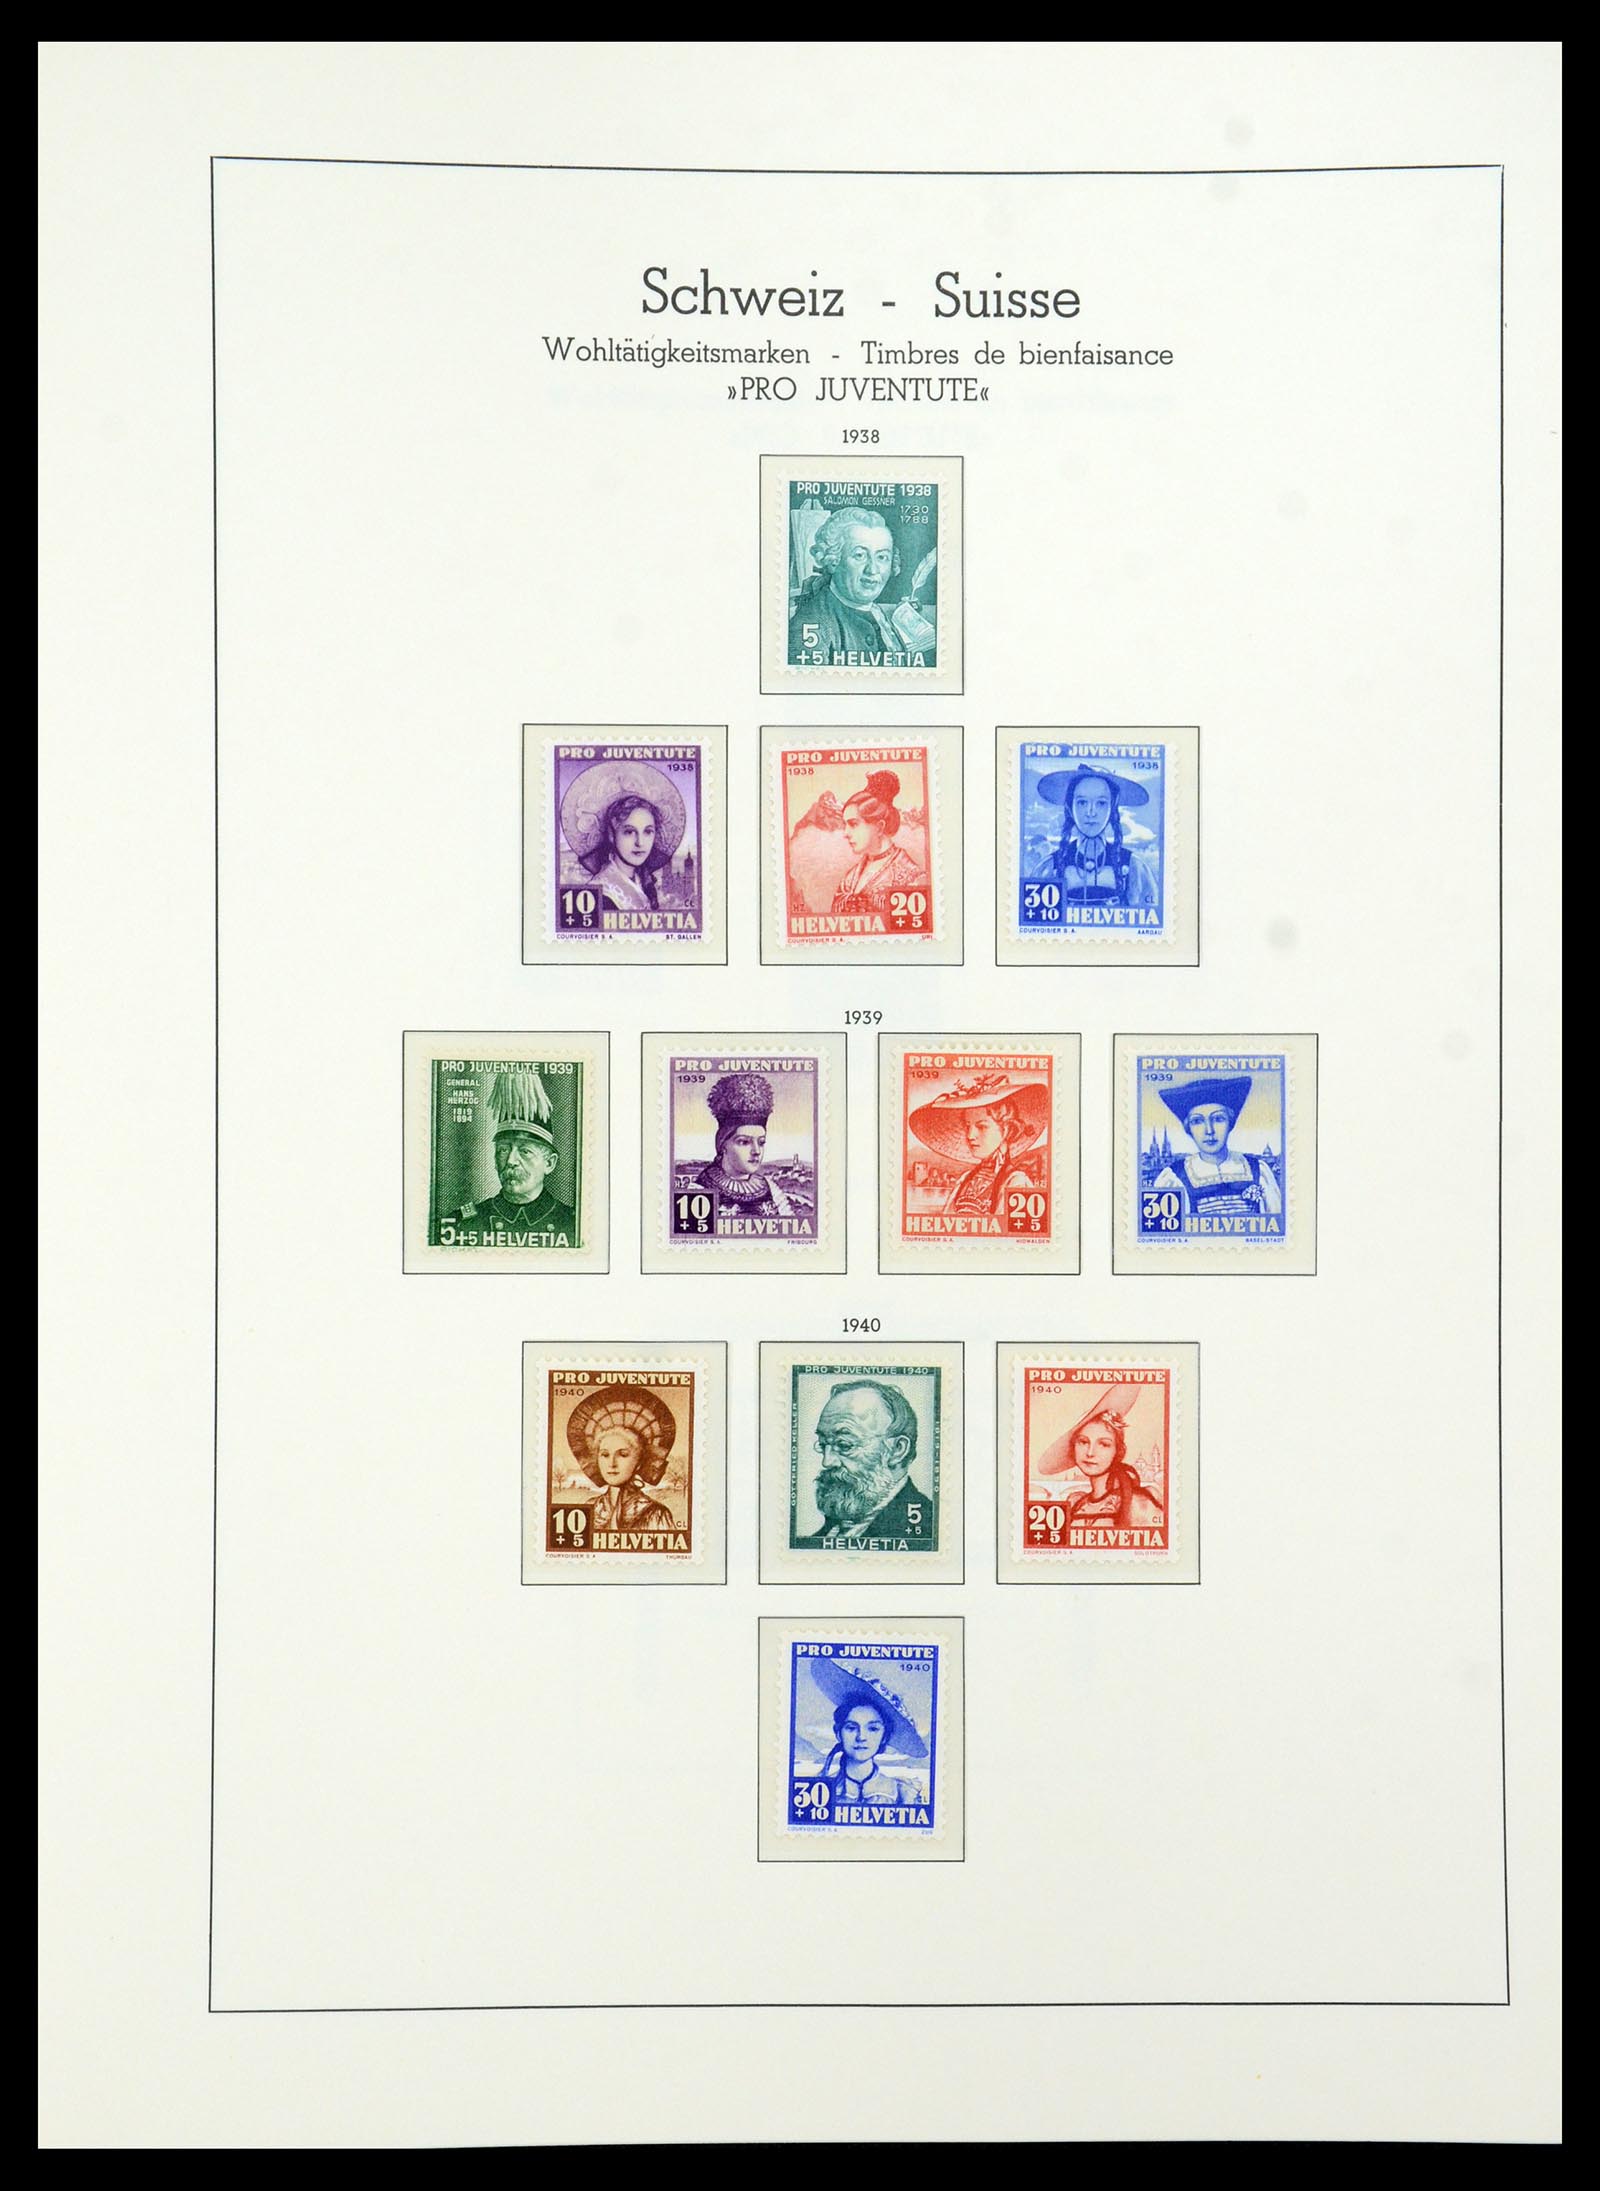 36284 039 - Stamp collection 36284 Switzerland 1854-2006.